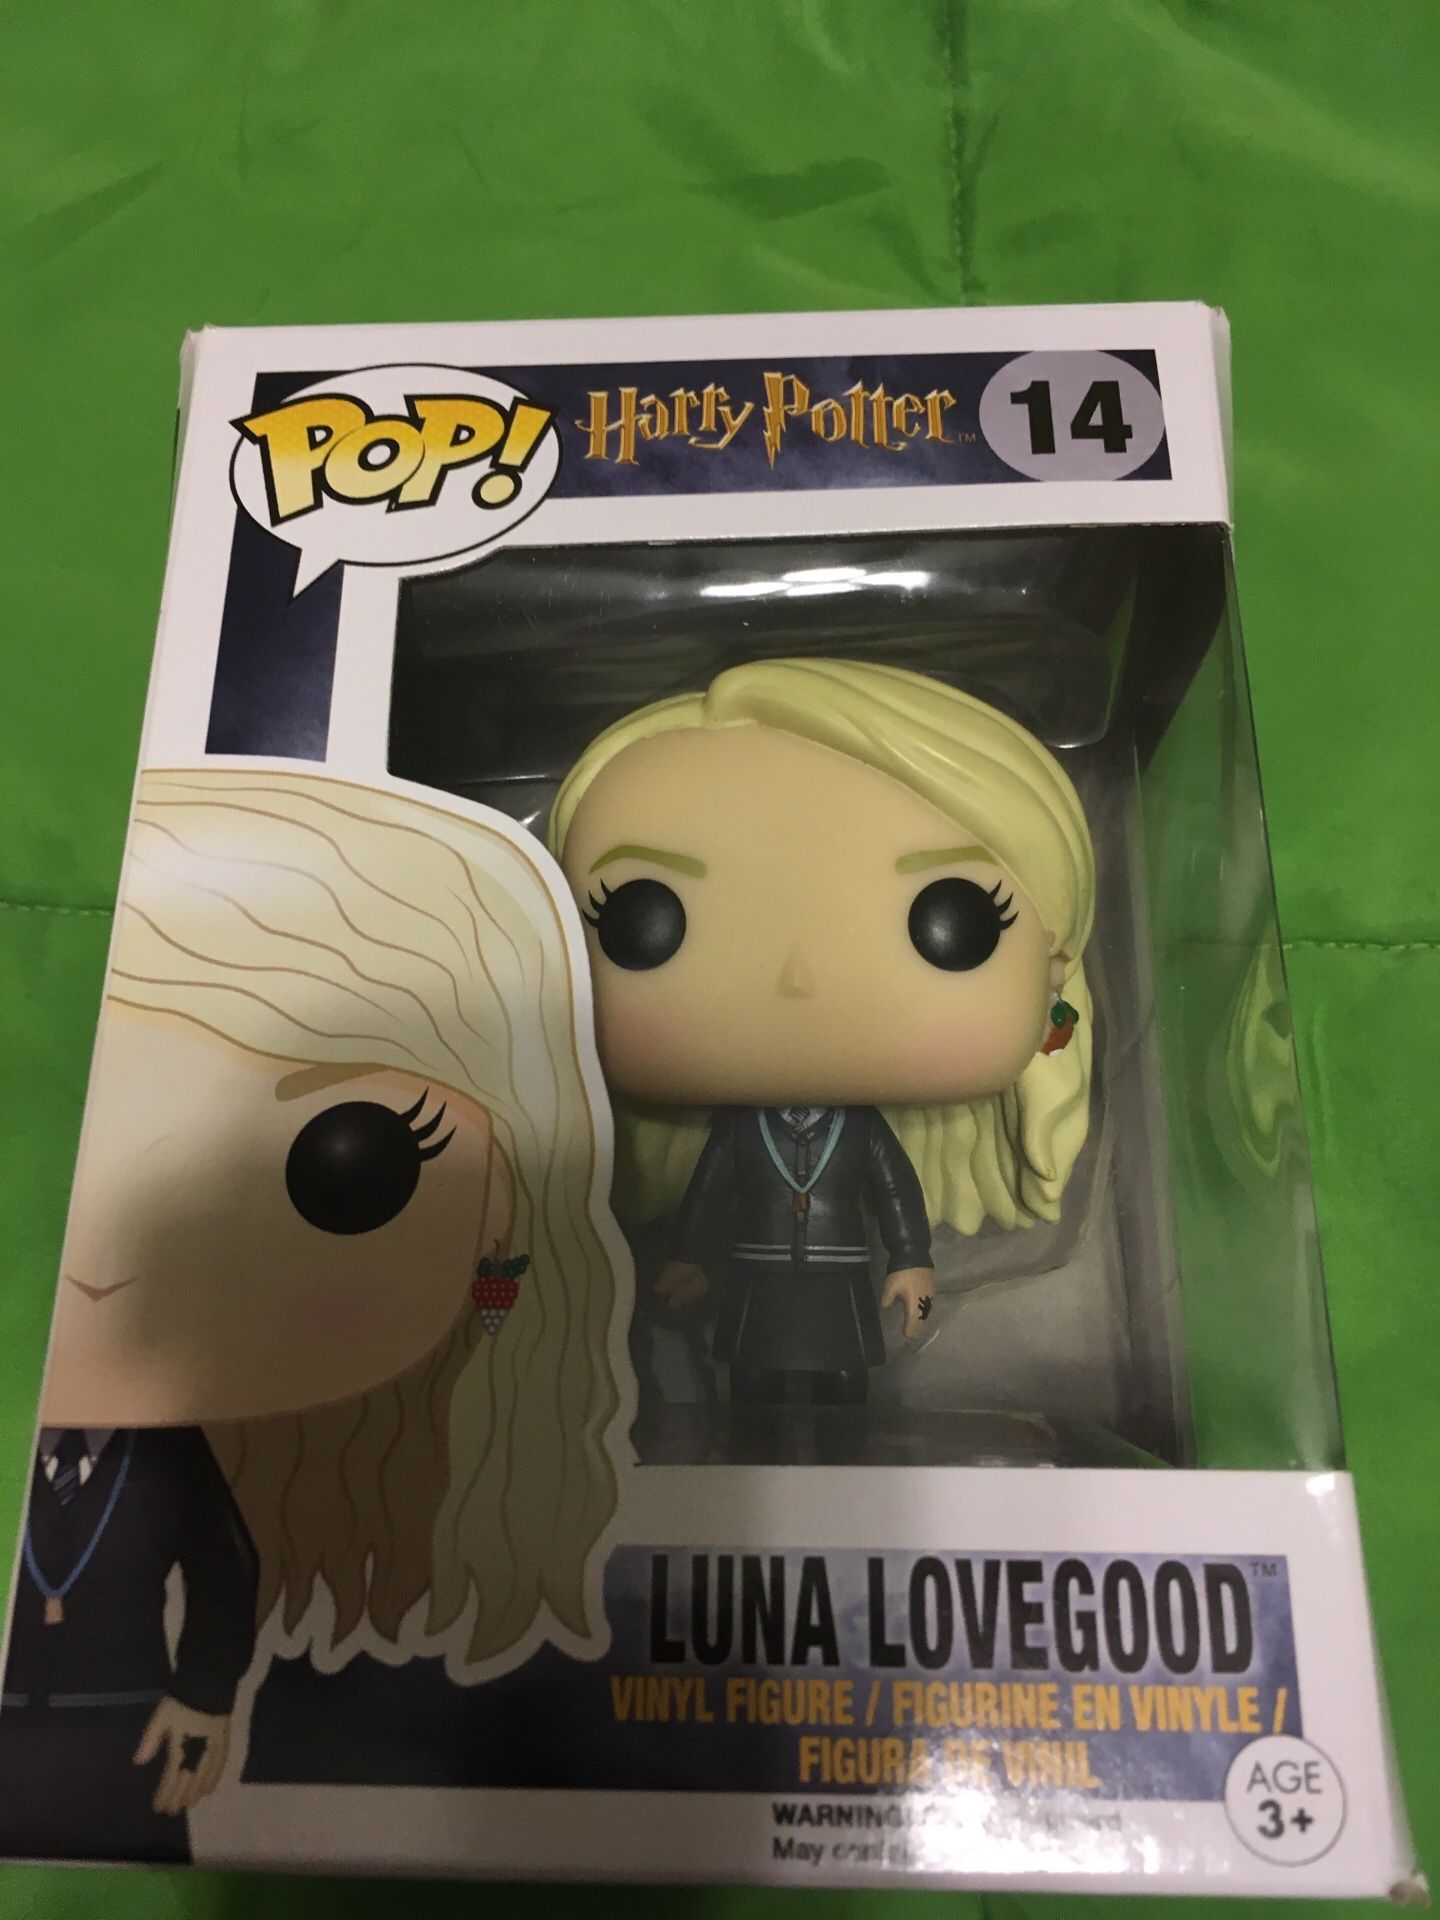 Pop! Vinyl Figurine Luna Lovegood